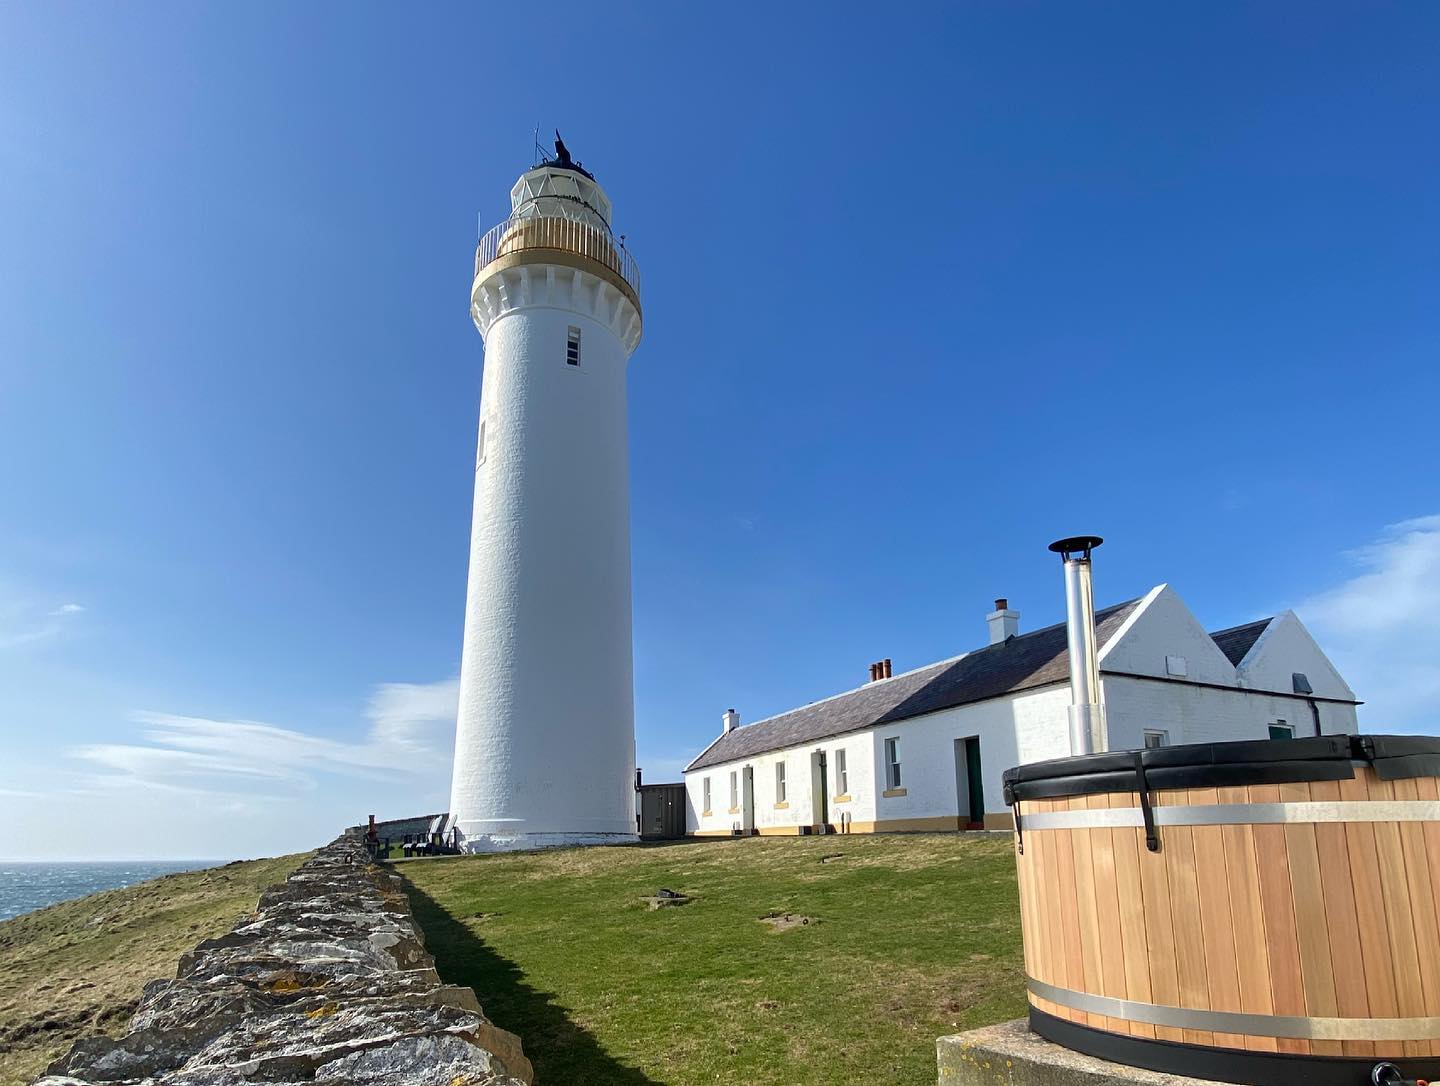 Cantick Head Lighthouse Cottage, The Highlands, Sleeps 4 288240130 393594369453092 4408446422415563344 n